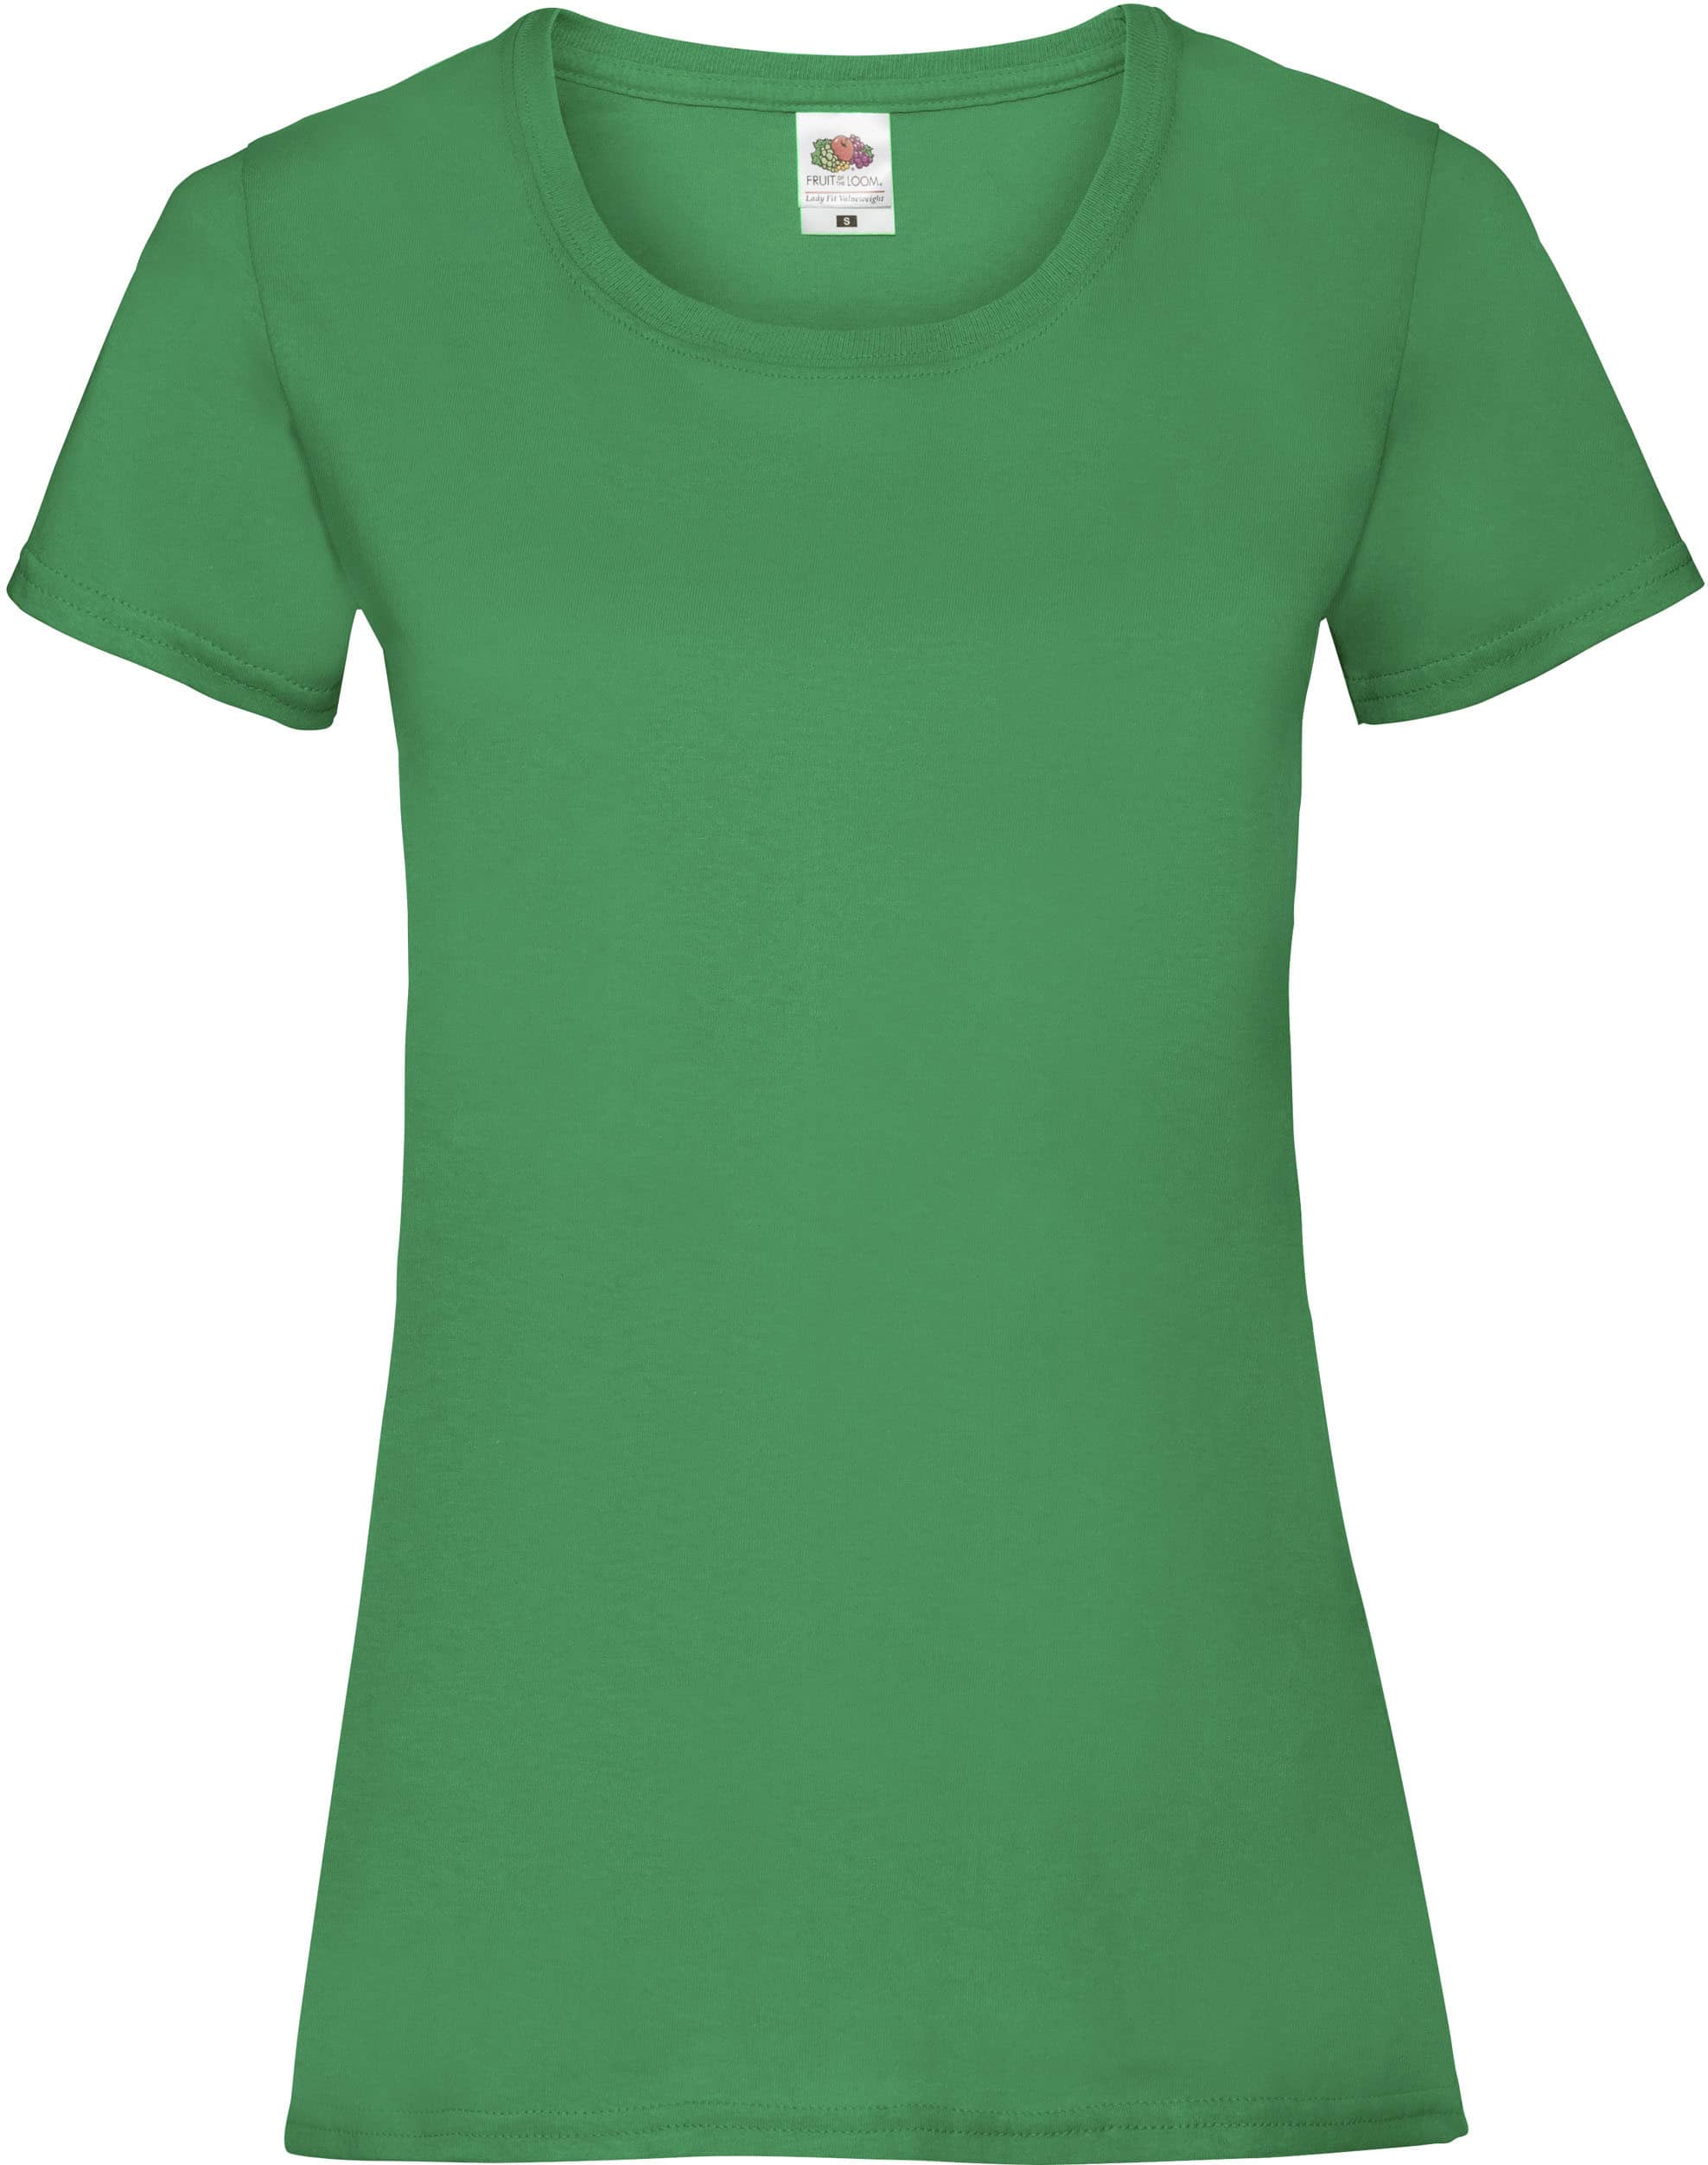 camiseta_personalizada_sc61372_verde_kelly